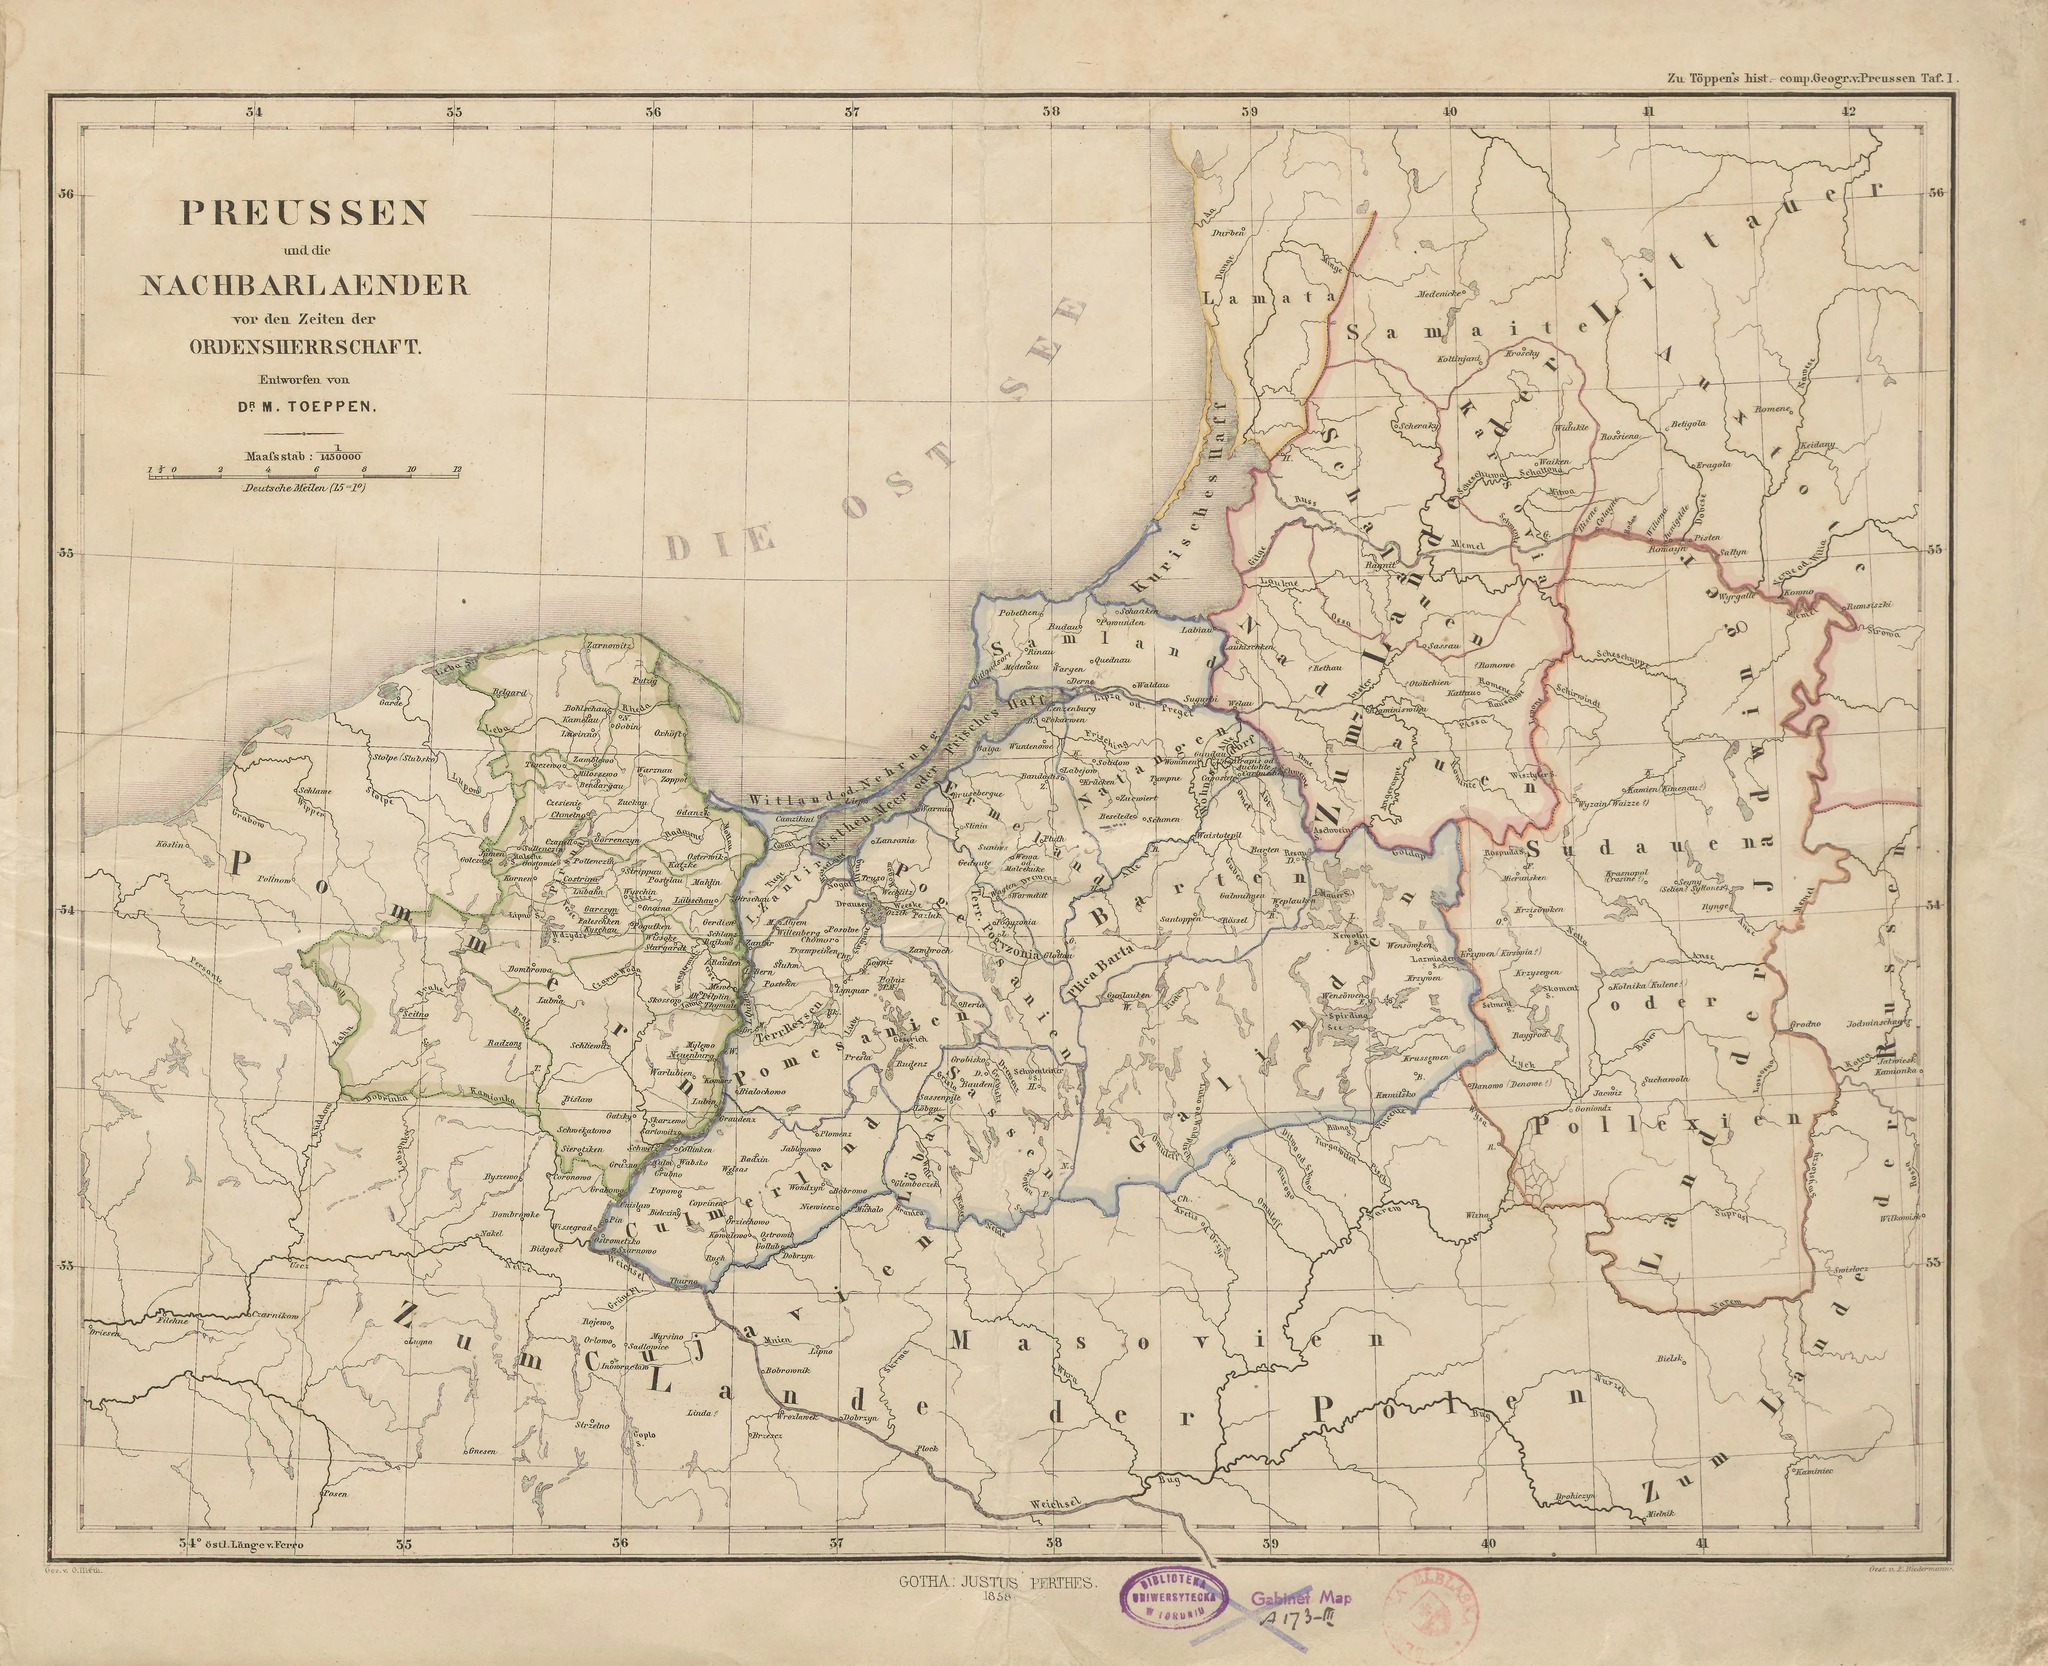 Preussen, vokiškas žemėlapis, aut. Toeppen ( baltų gentys 13 amžiuje).jpg